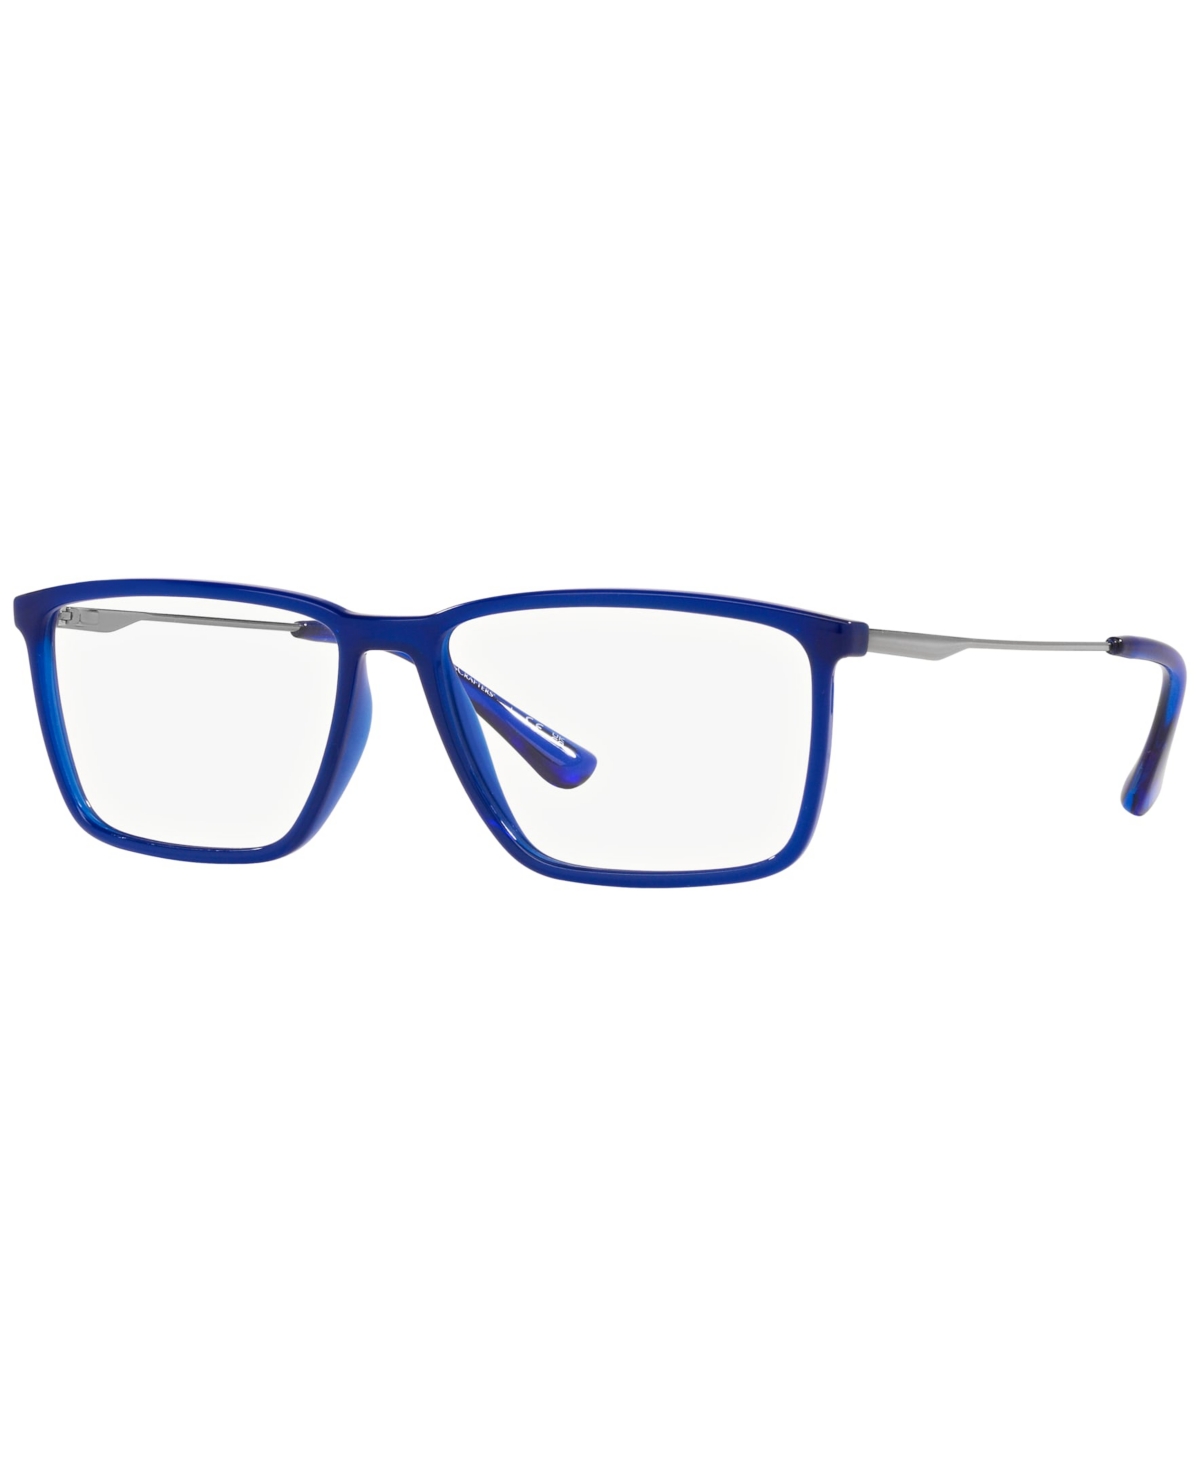 Men's Eyeglasses, EC3501 - Dark Havana